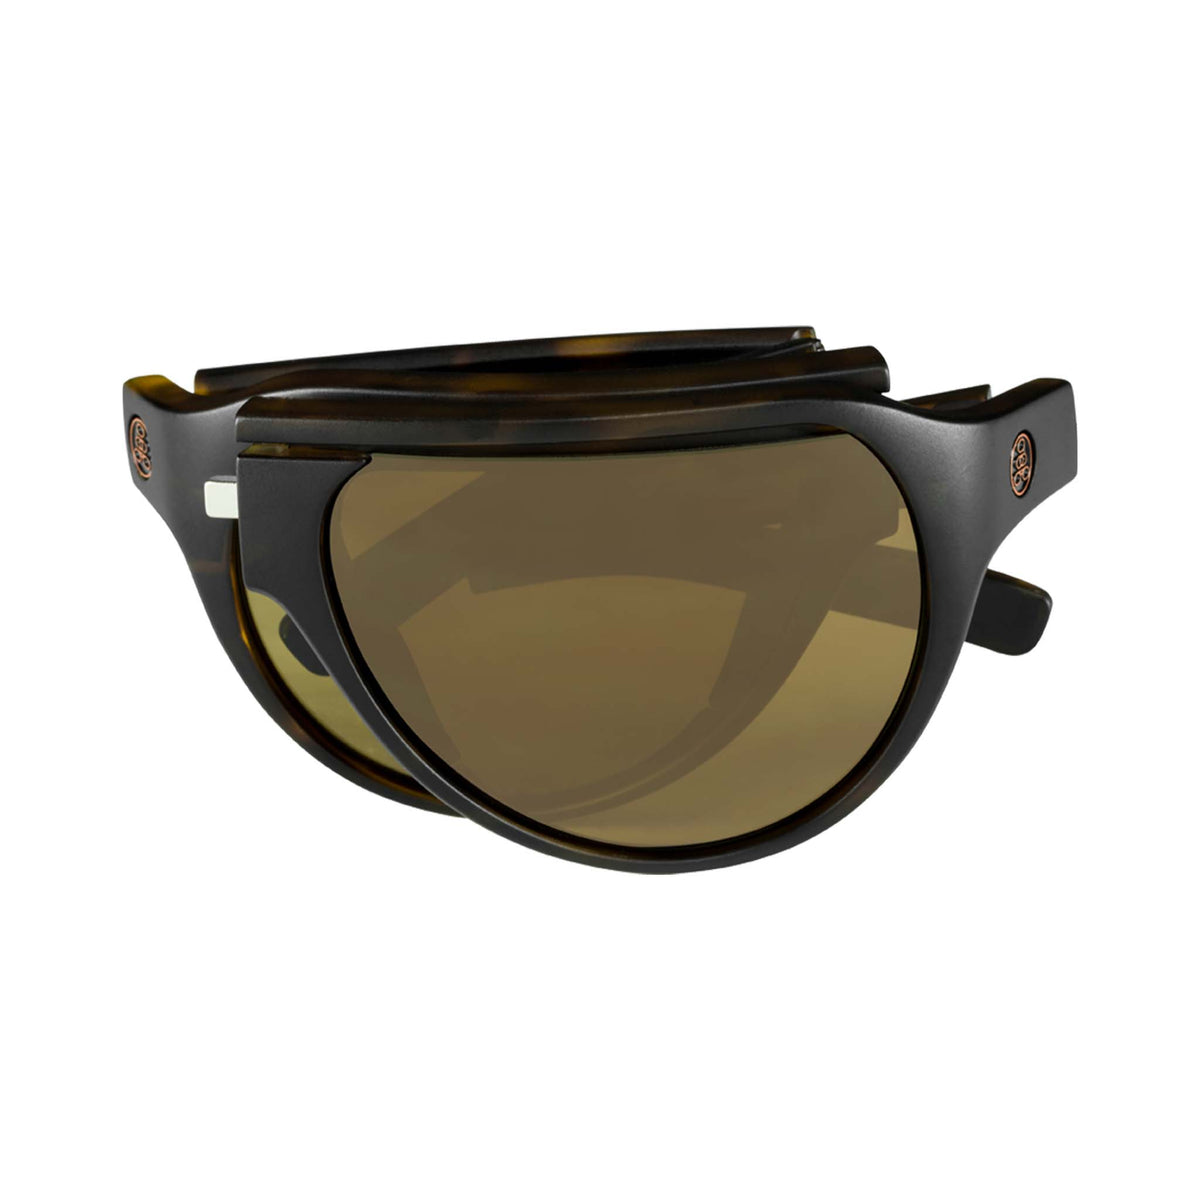 Popticals, Premium Compact Sunglasses, PopAir, 300010-CUNP, Polarized Sunglasses, Matte Tortoise Frame, Brown Lenses, Compact View